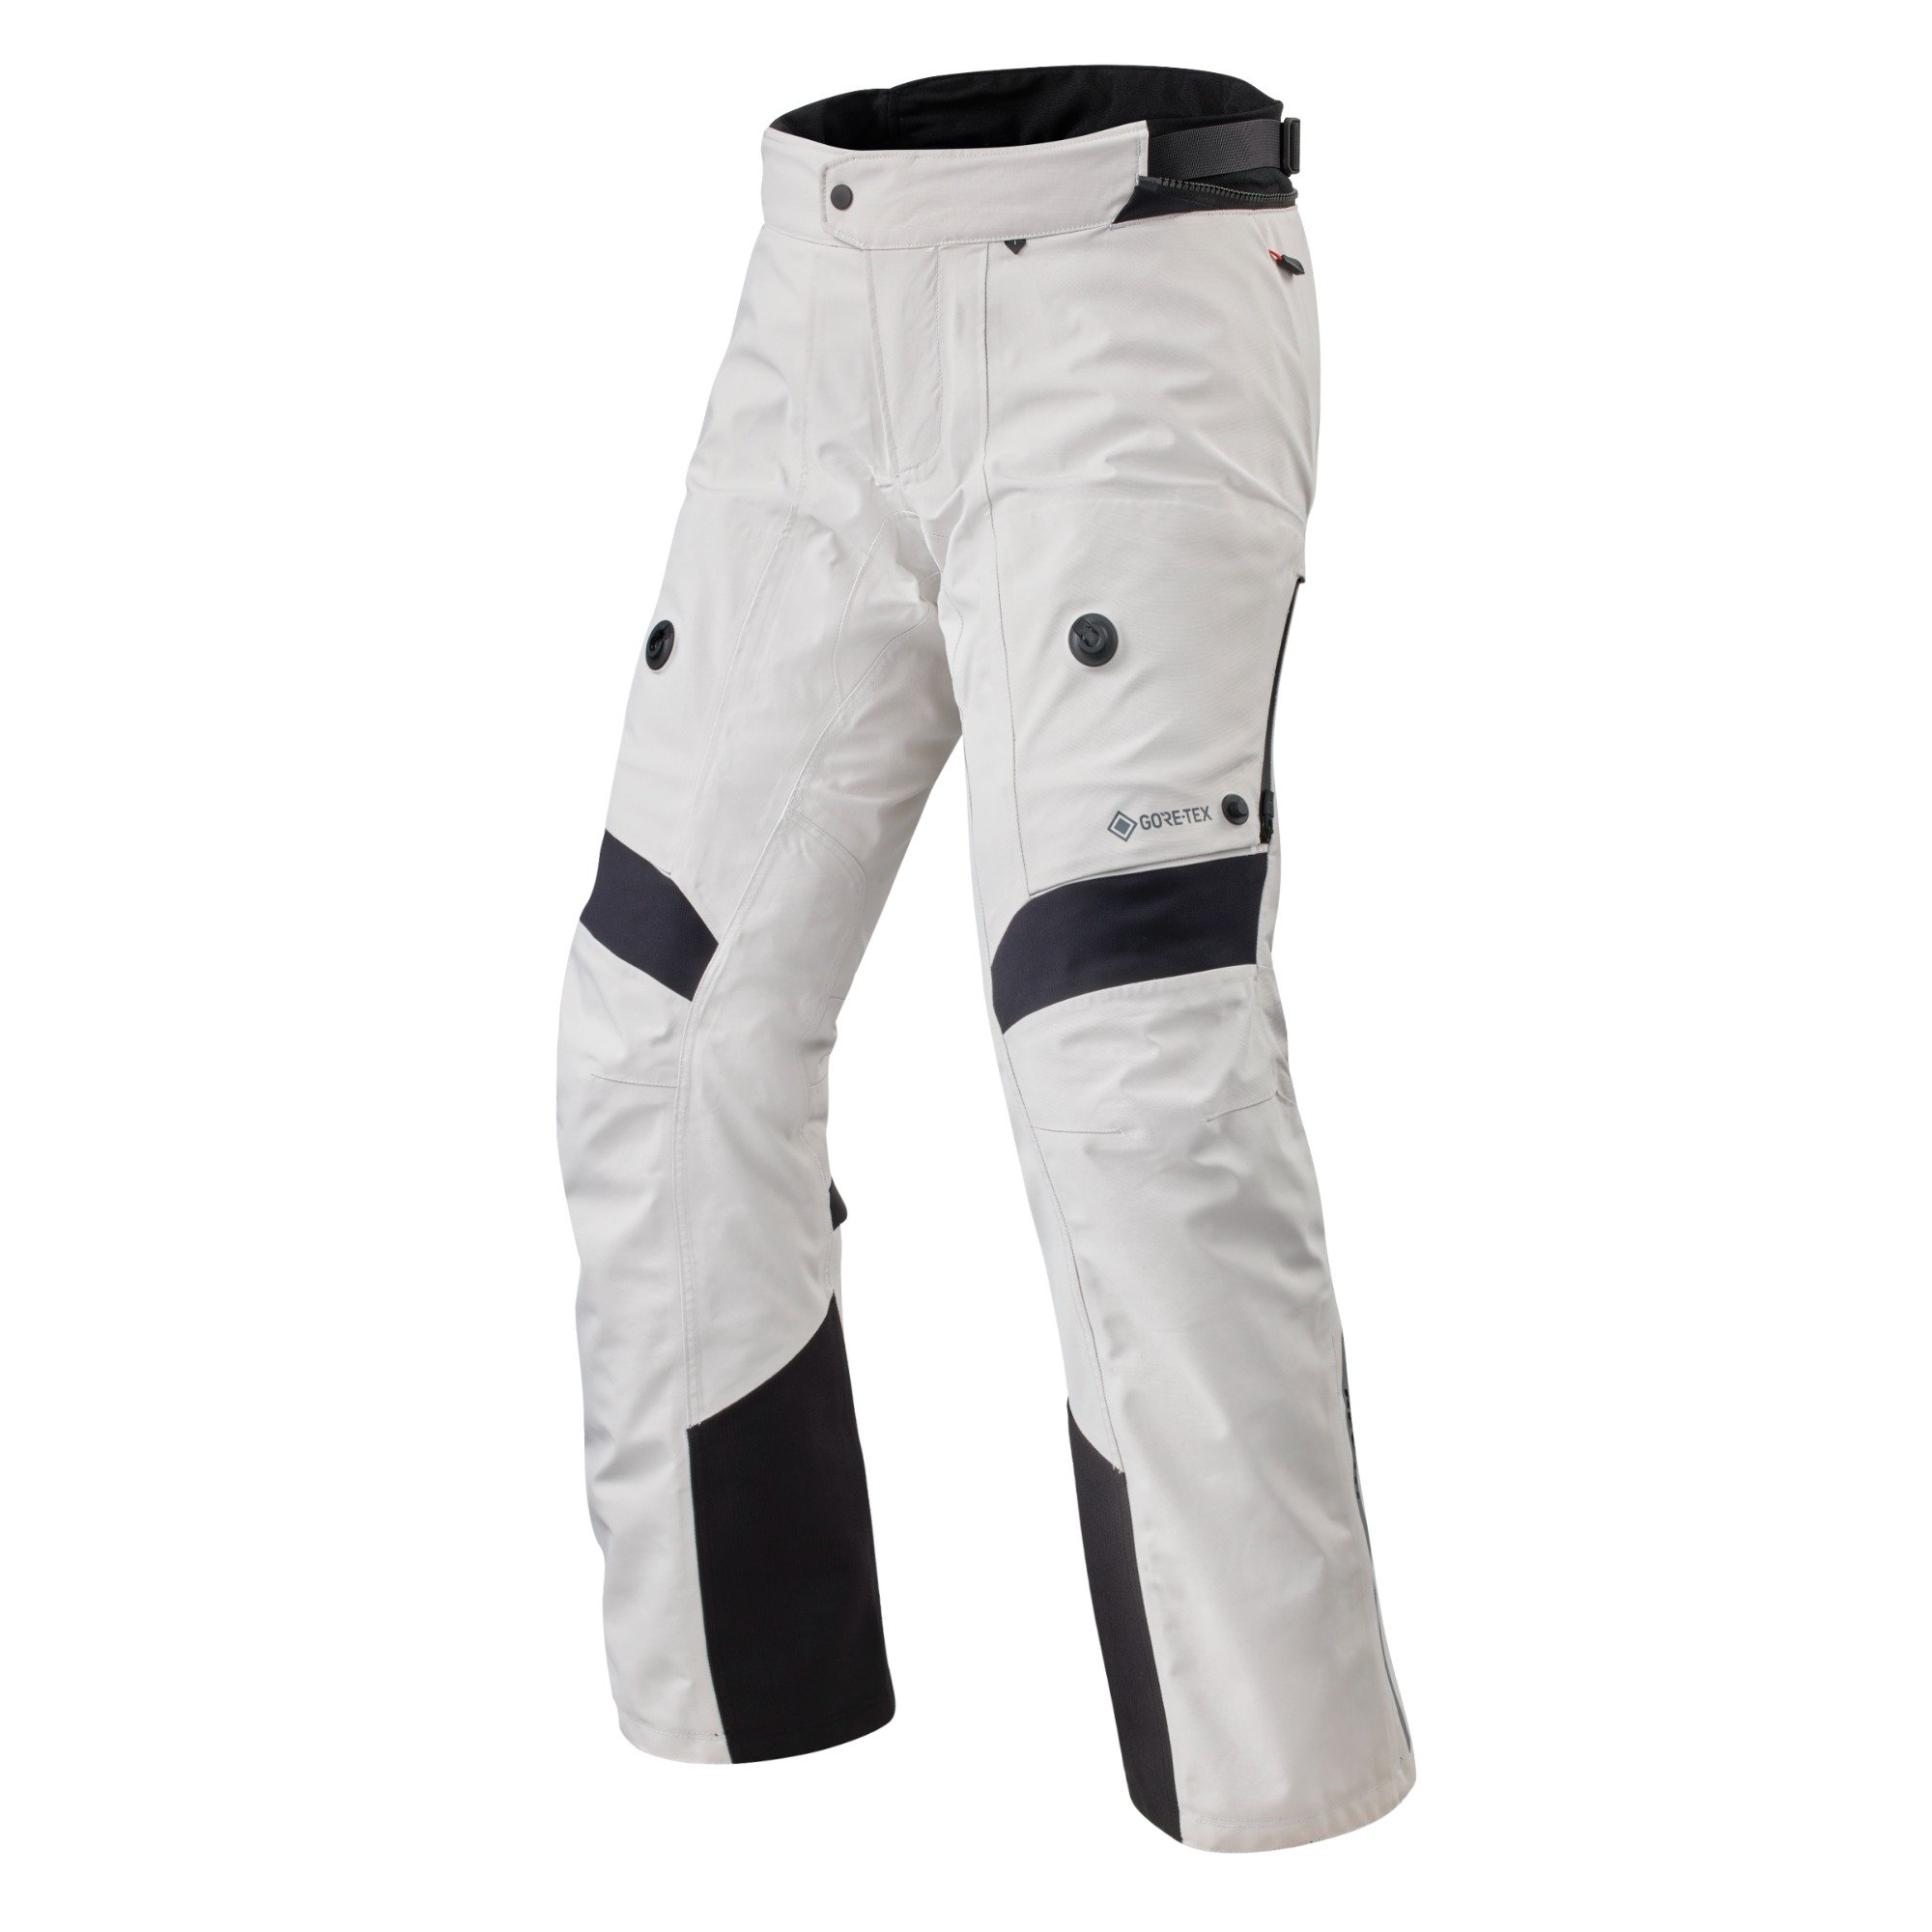 Image of REV'IT! Pants Poseidon 3 GTX Silver Black Standard Motorcycle Pants Talla XL